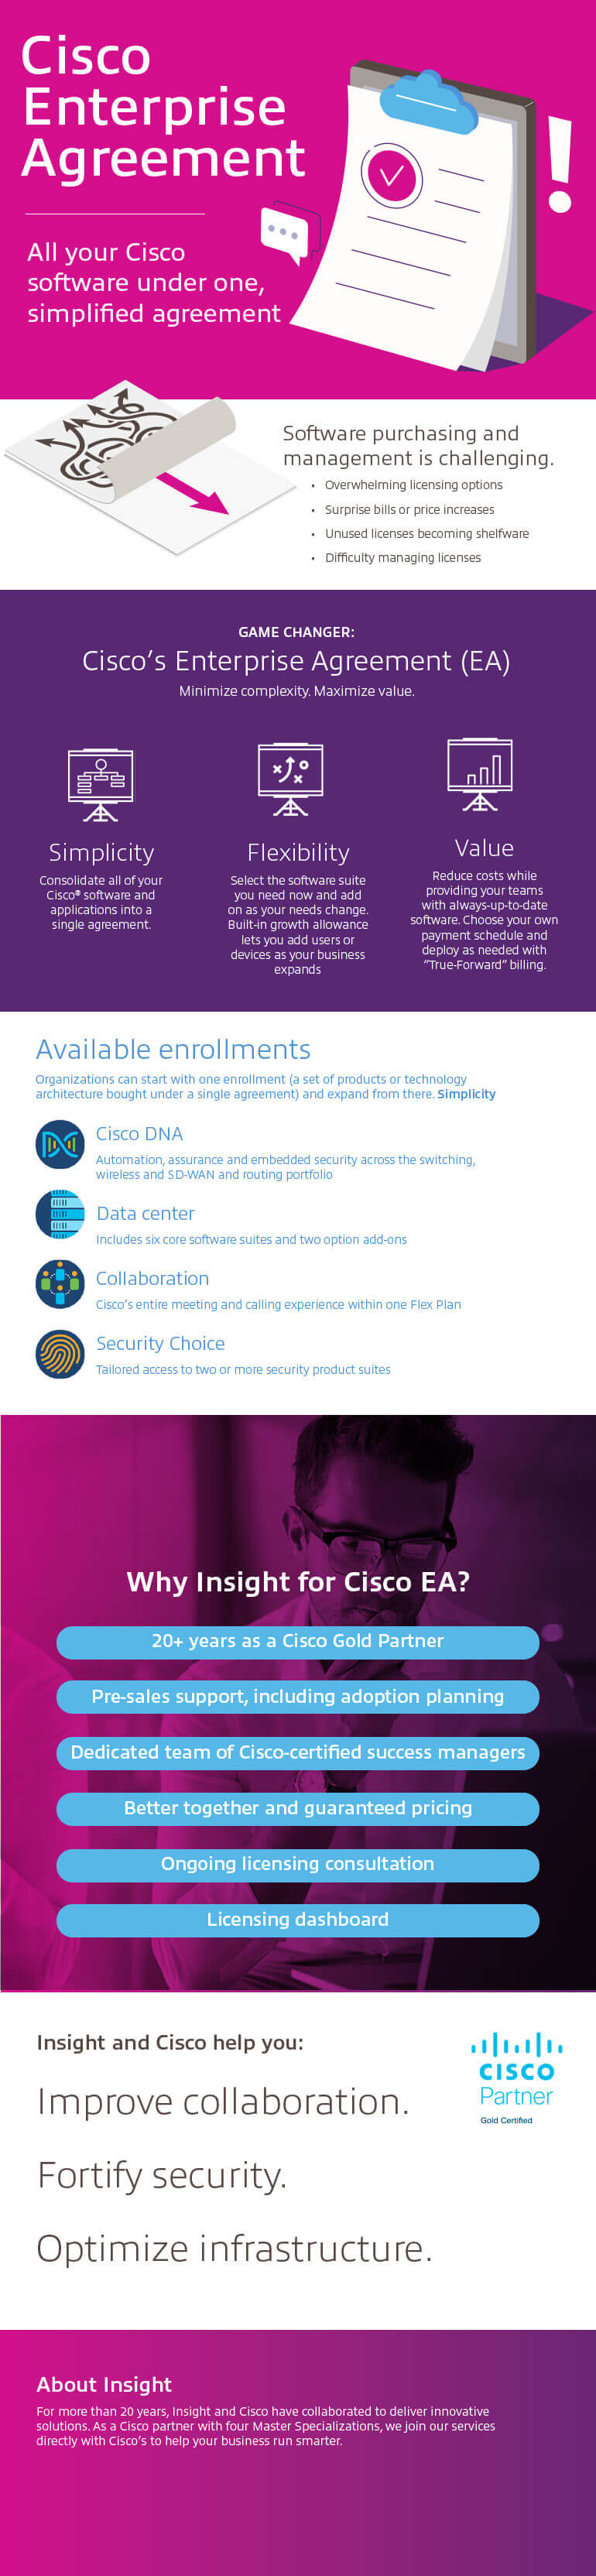 Cisco Enterprise Agreement Infographic